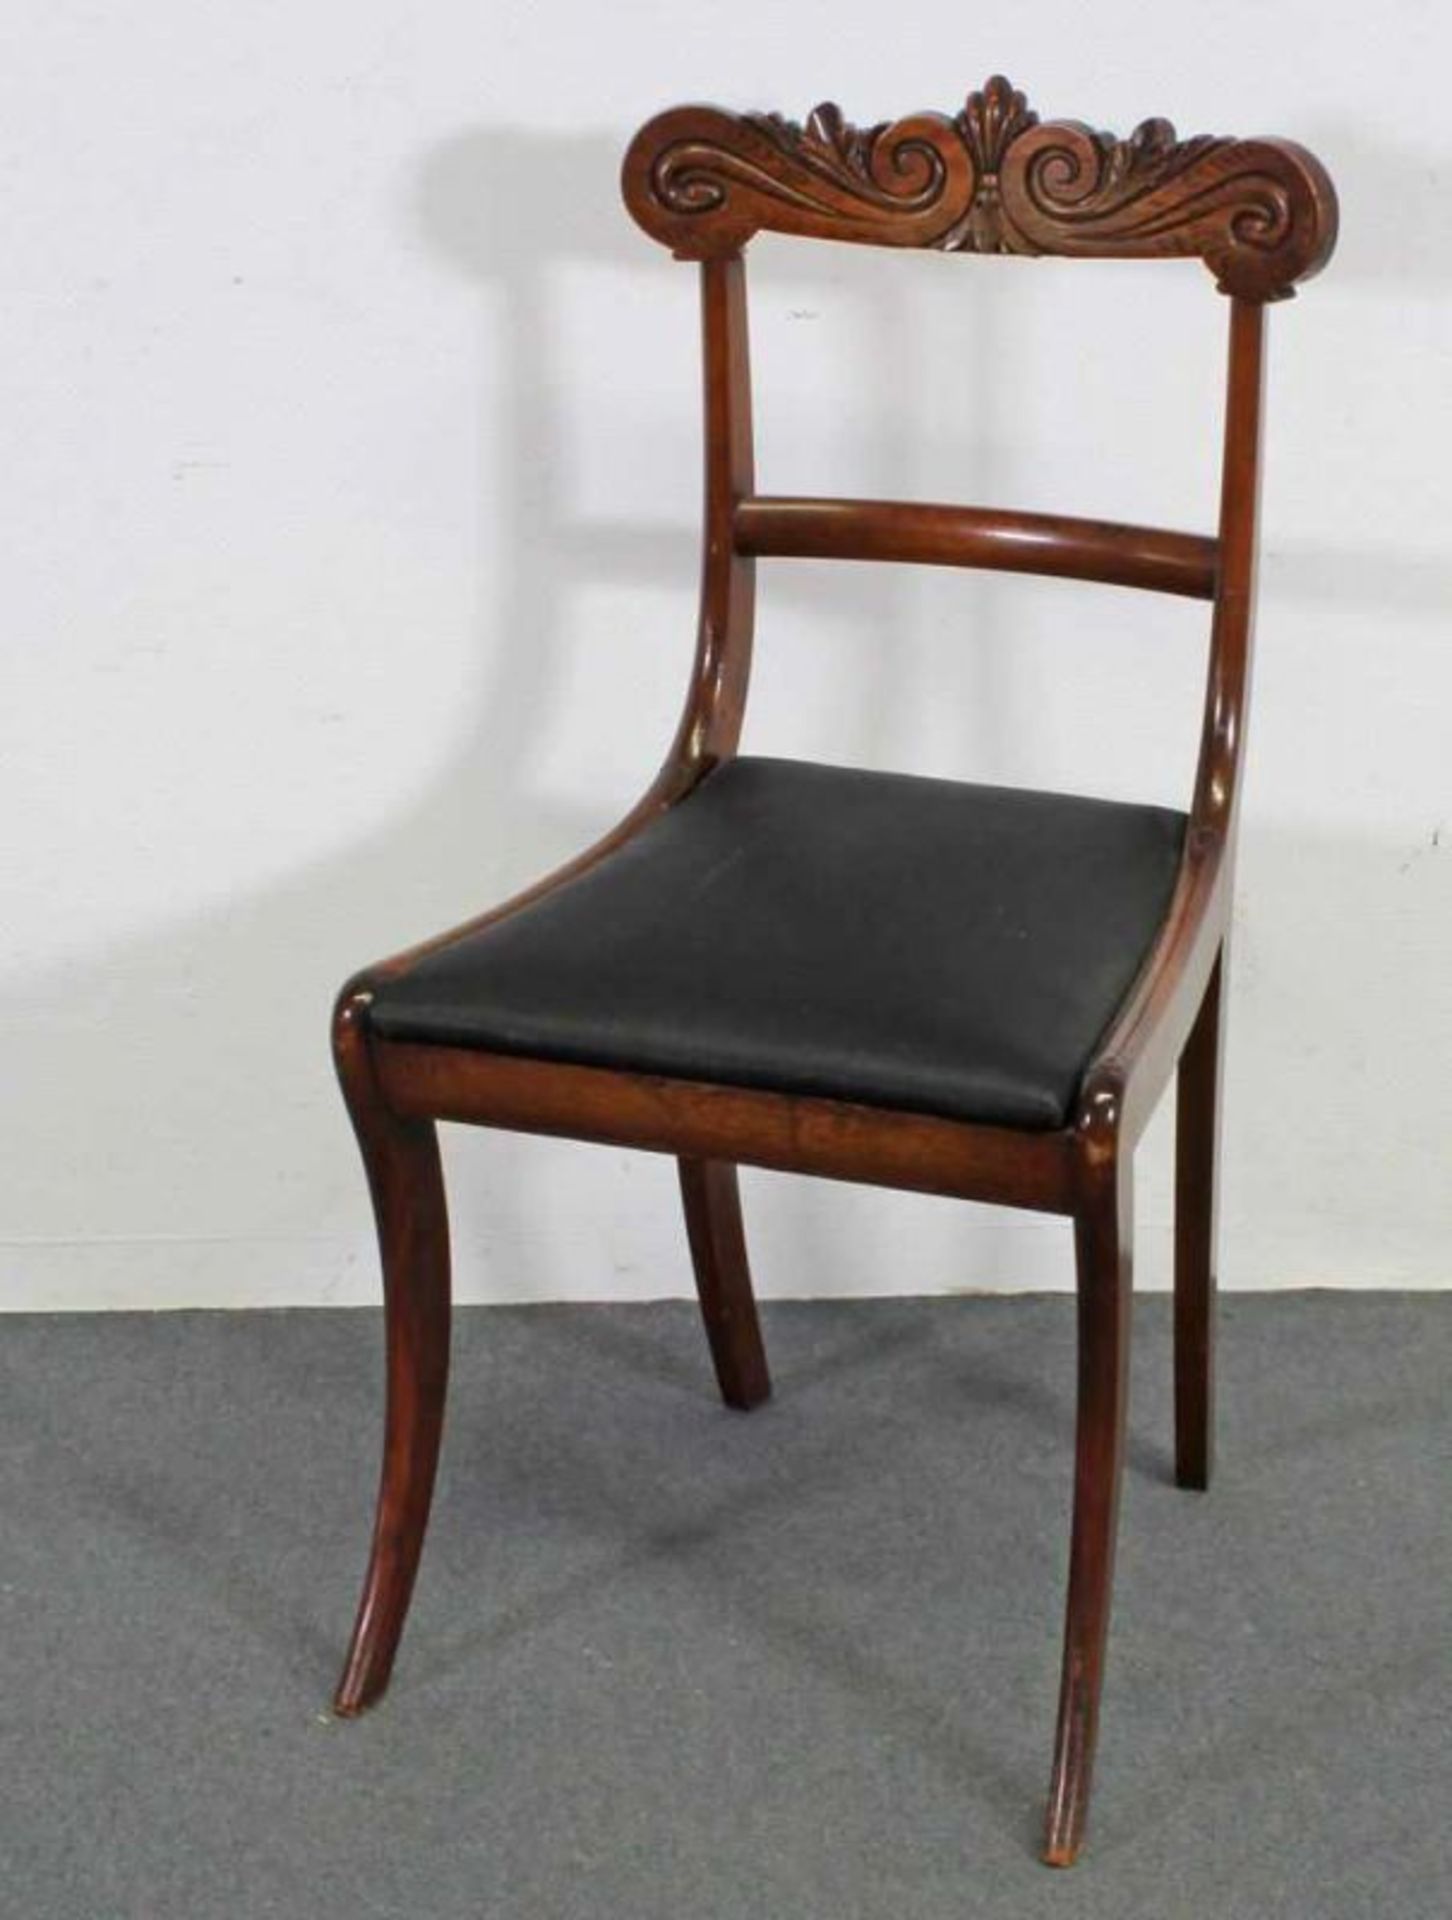 10 Stühle, England, Regency, um 1830, Mahagoni, loses Sitzpolster, geschnitzte Rückenzarge 20.00 % - Image 2 of 2